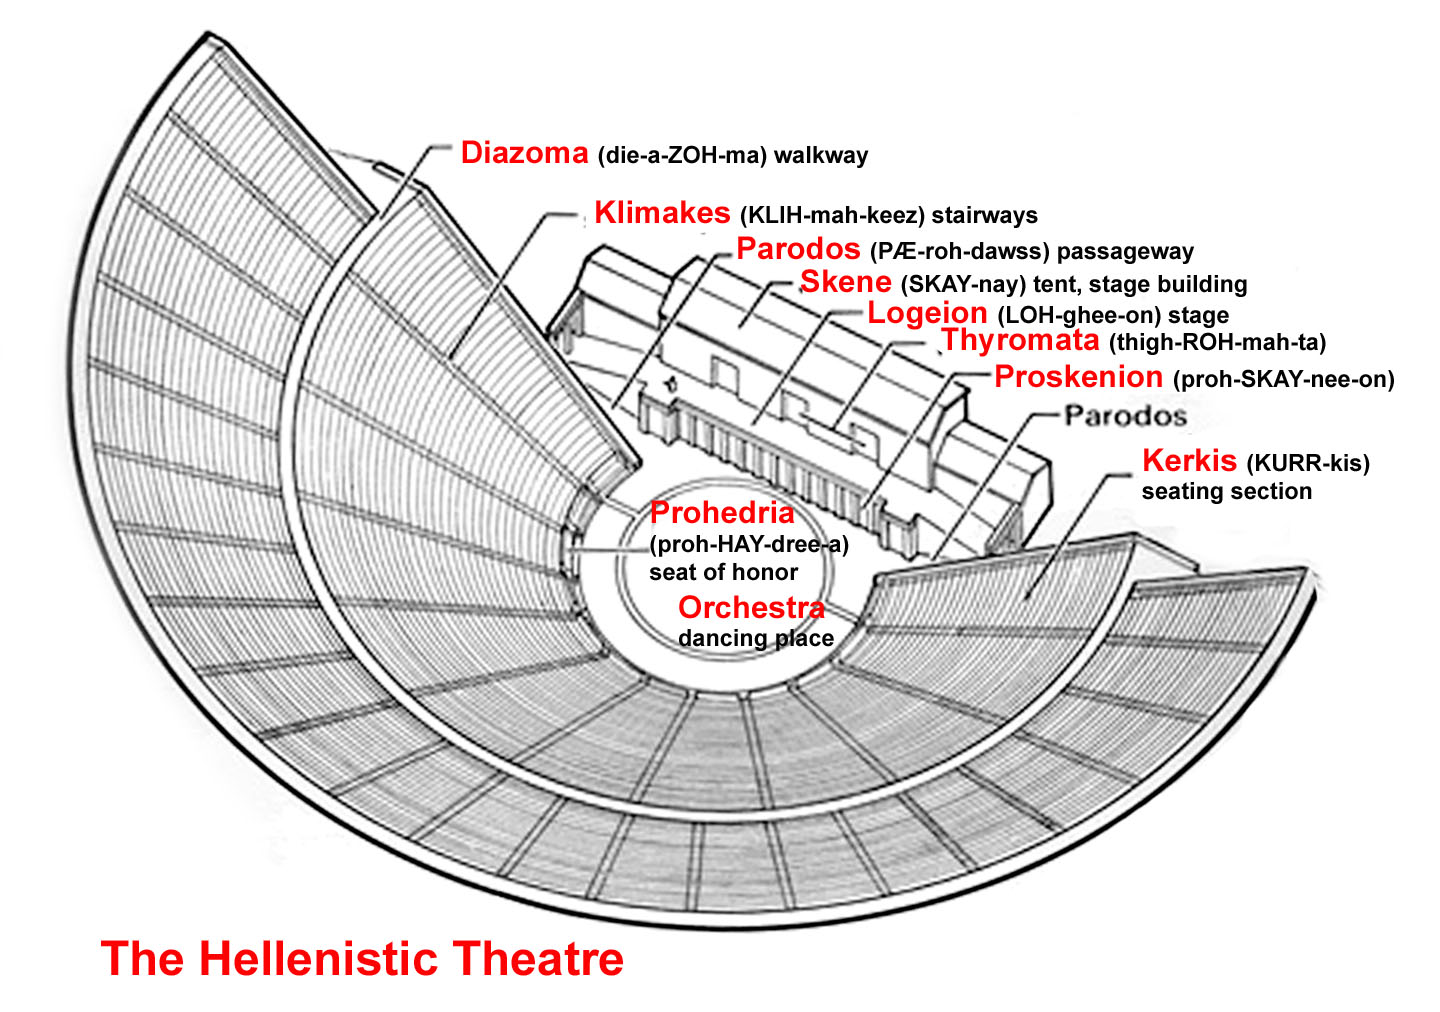 Parts of theatre. Схема театра в древней Греции. Просцениум. Скена в древней Греции. Hellenistic Theatre.